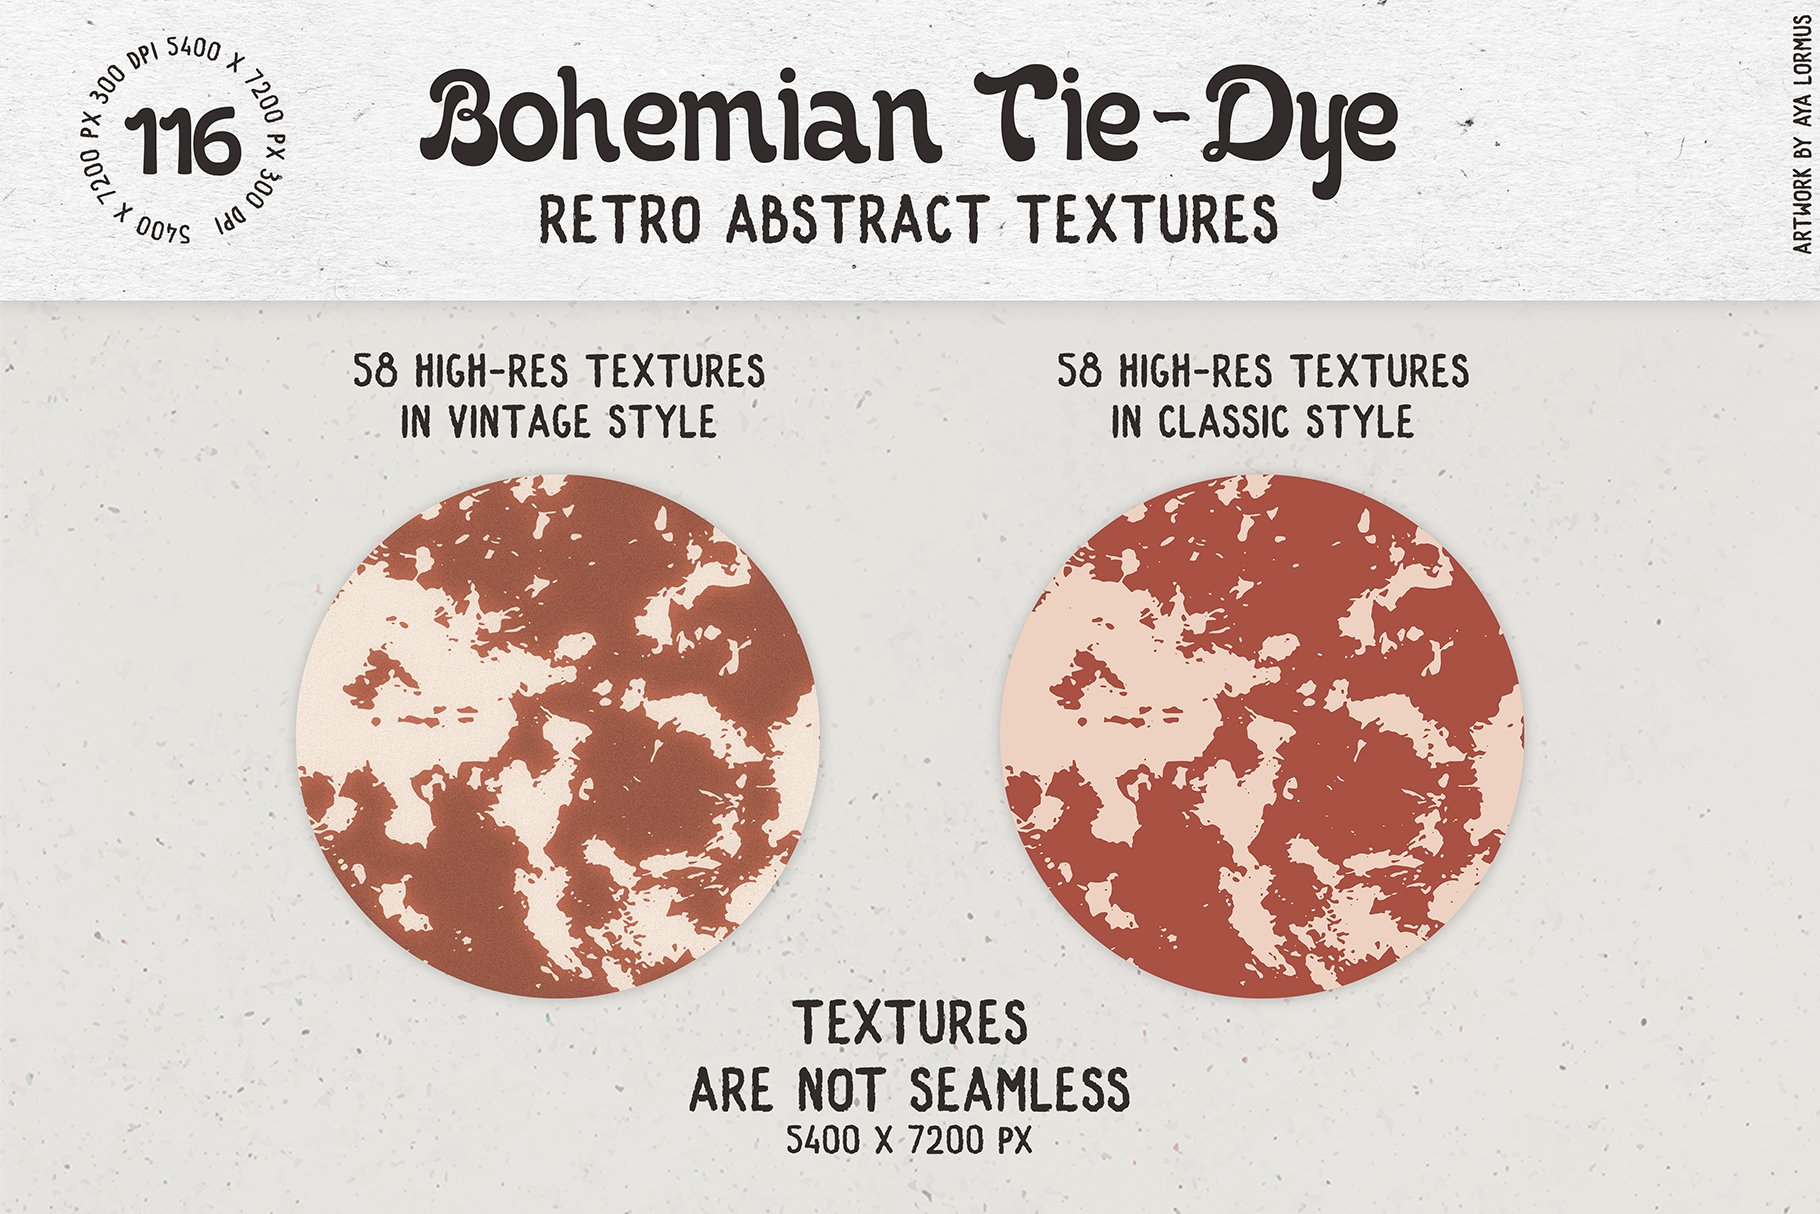 Bohemian TieDye Retro textures preview image.